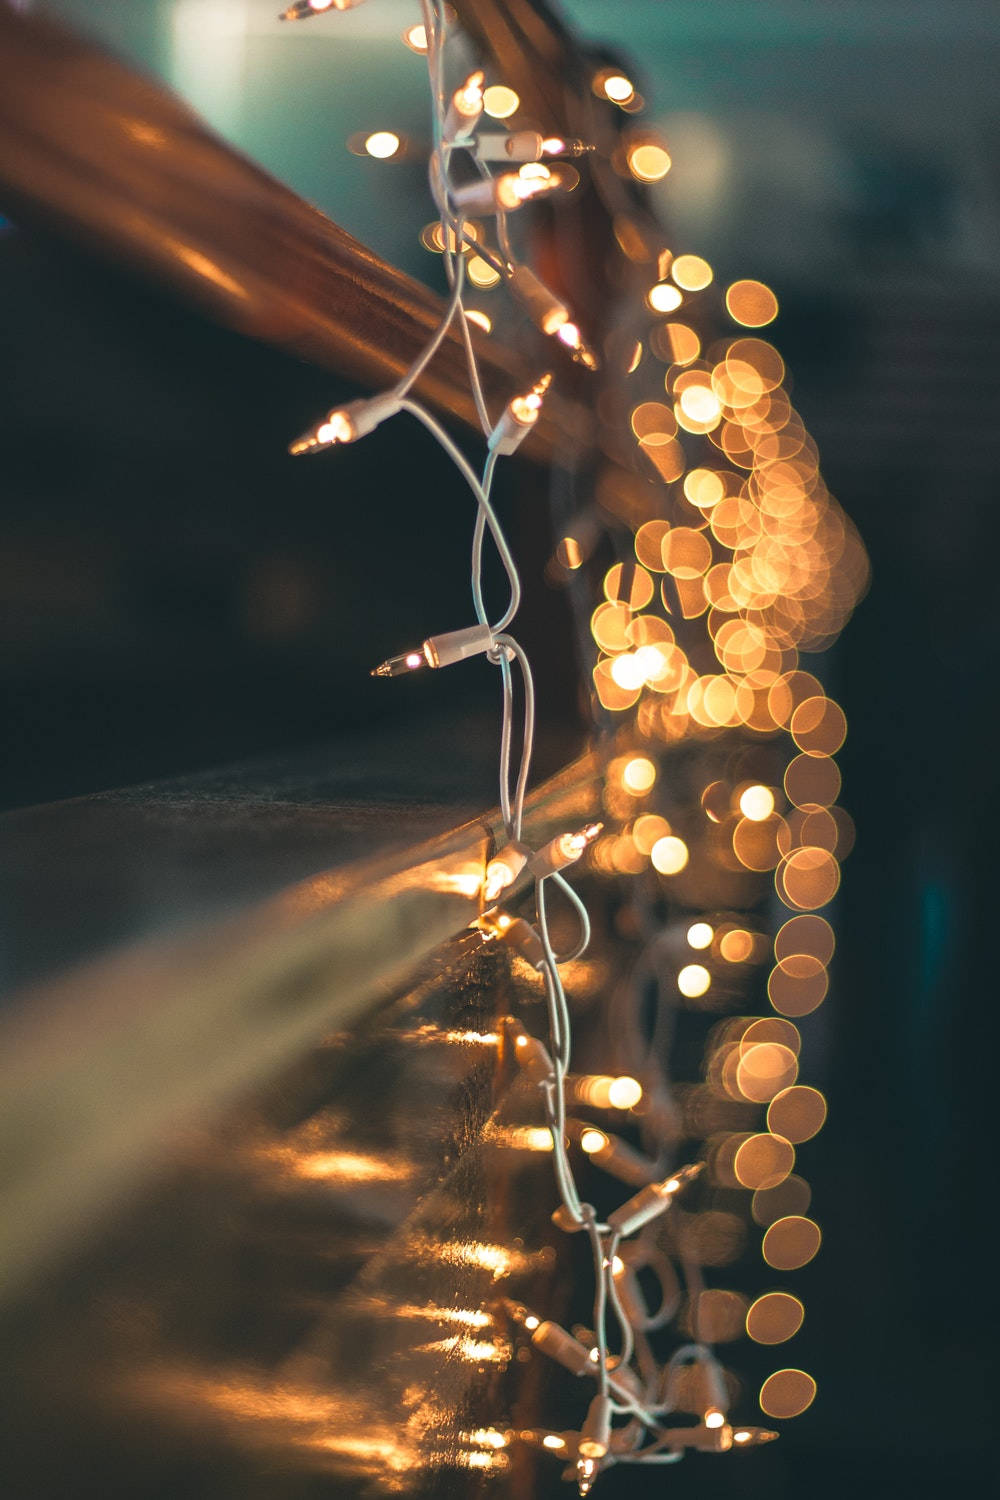 Illuminate your holiday festivities with beautiful Christmas lights! Wallpaper